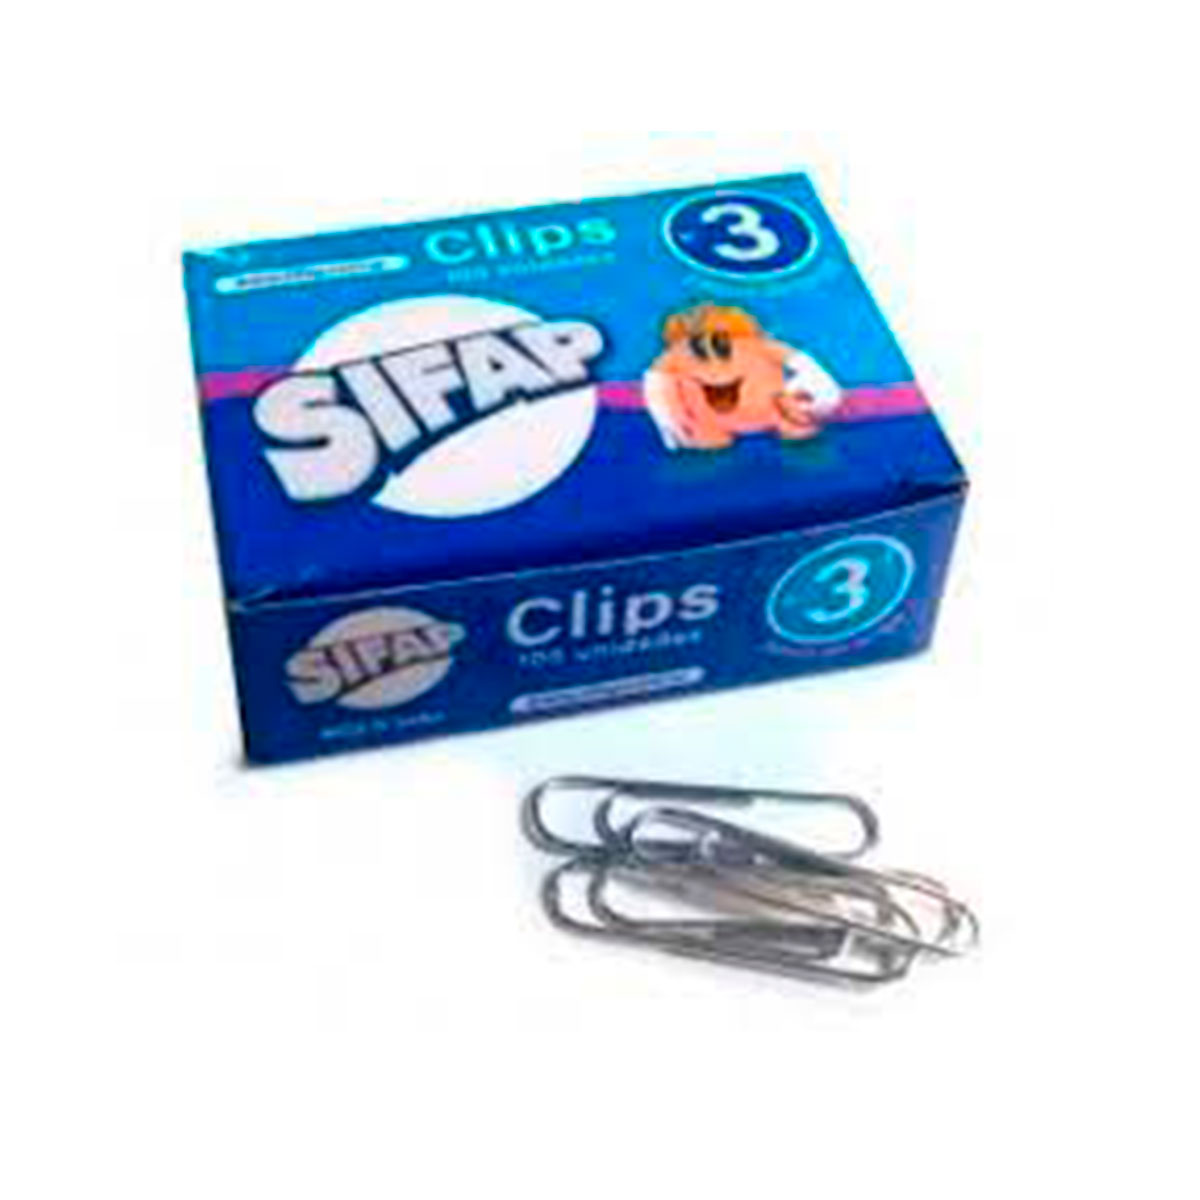 2300133000 SIFAP                                                        | SIFAP CLIPS Nº 3 X 100 UNIDADES                                                                                                                                                                                                                 